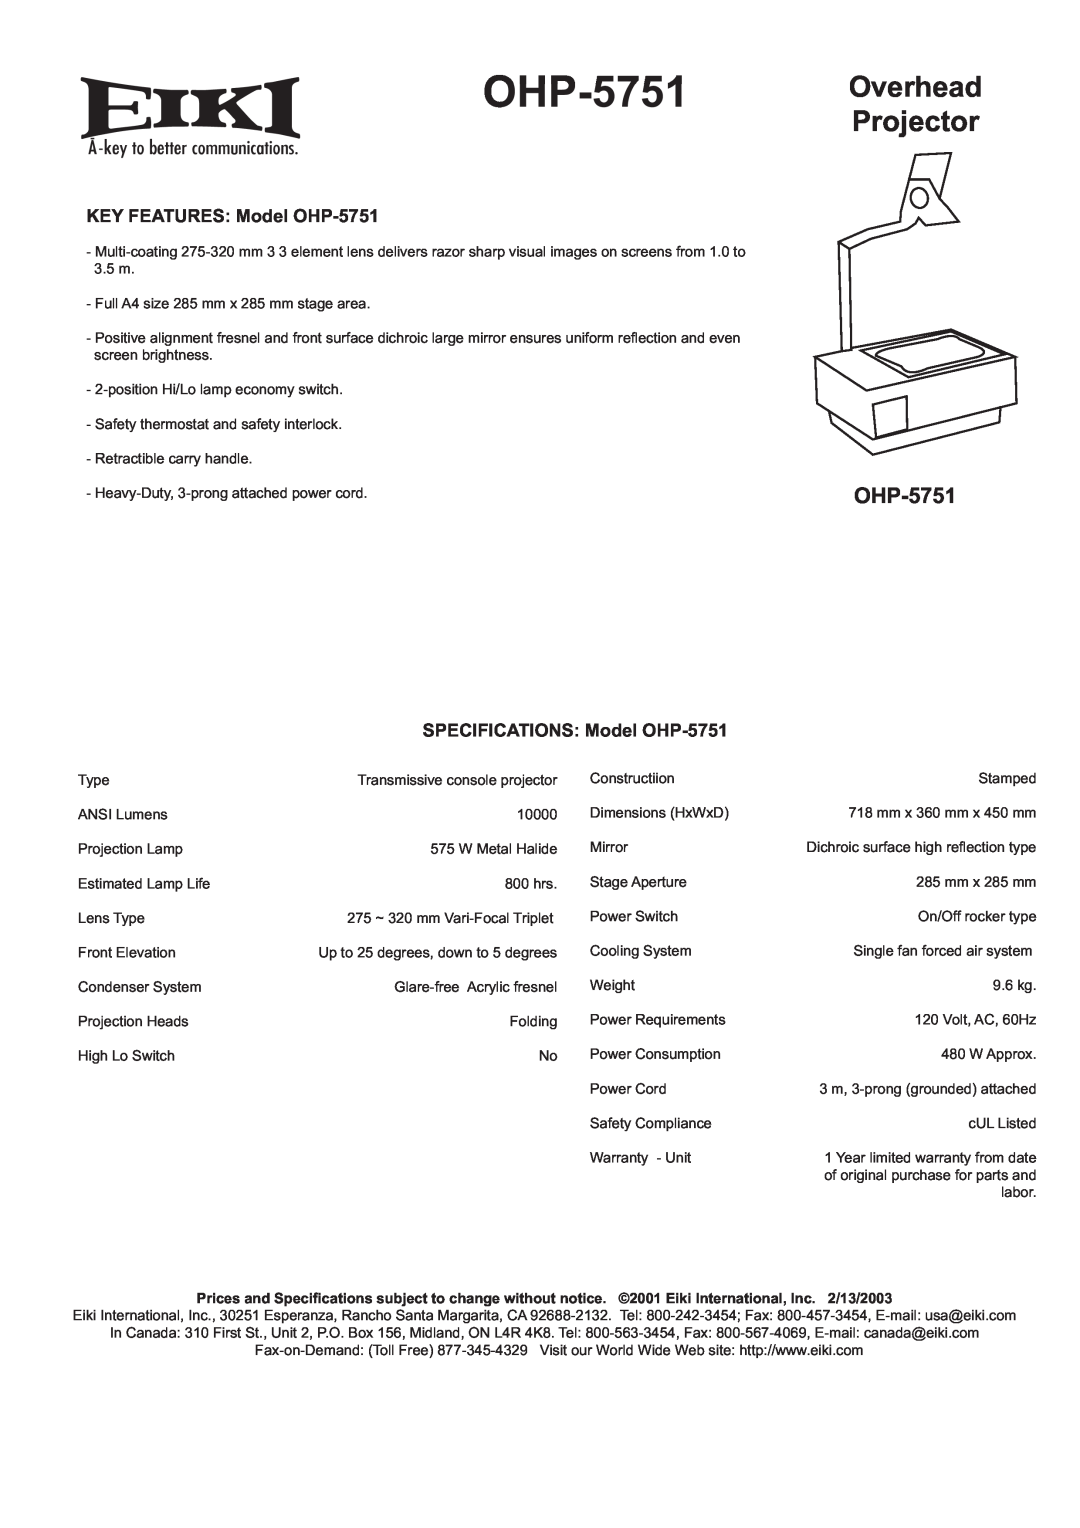 Eiki specifications Overhead Projector, KEY FEATURES: Model OHP-5751, SPECIFICATIONS Model OHP-5751 